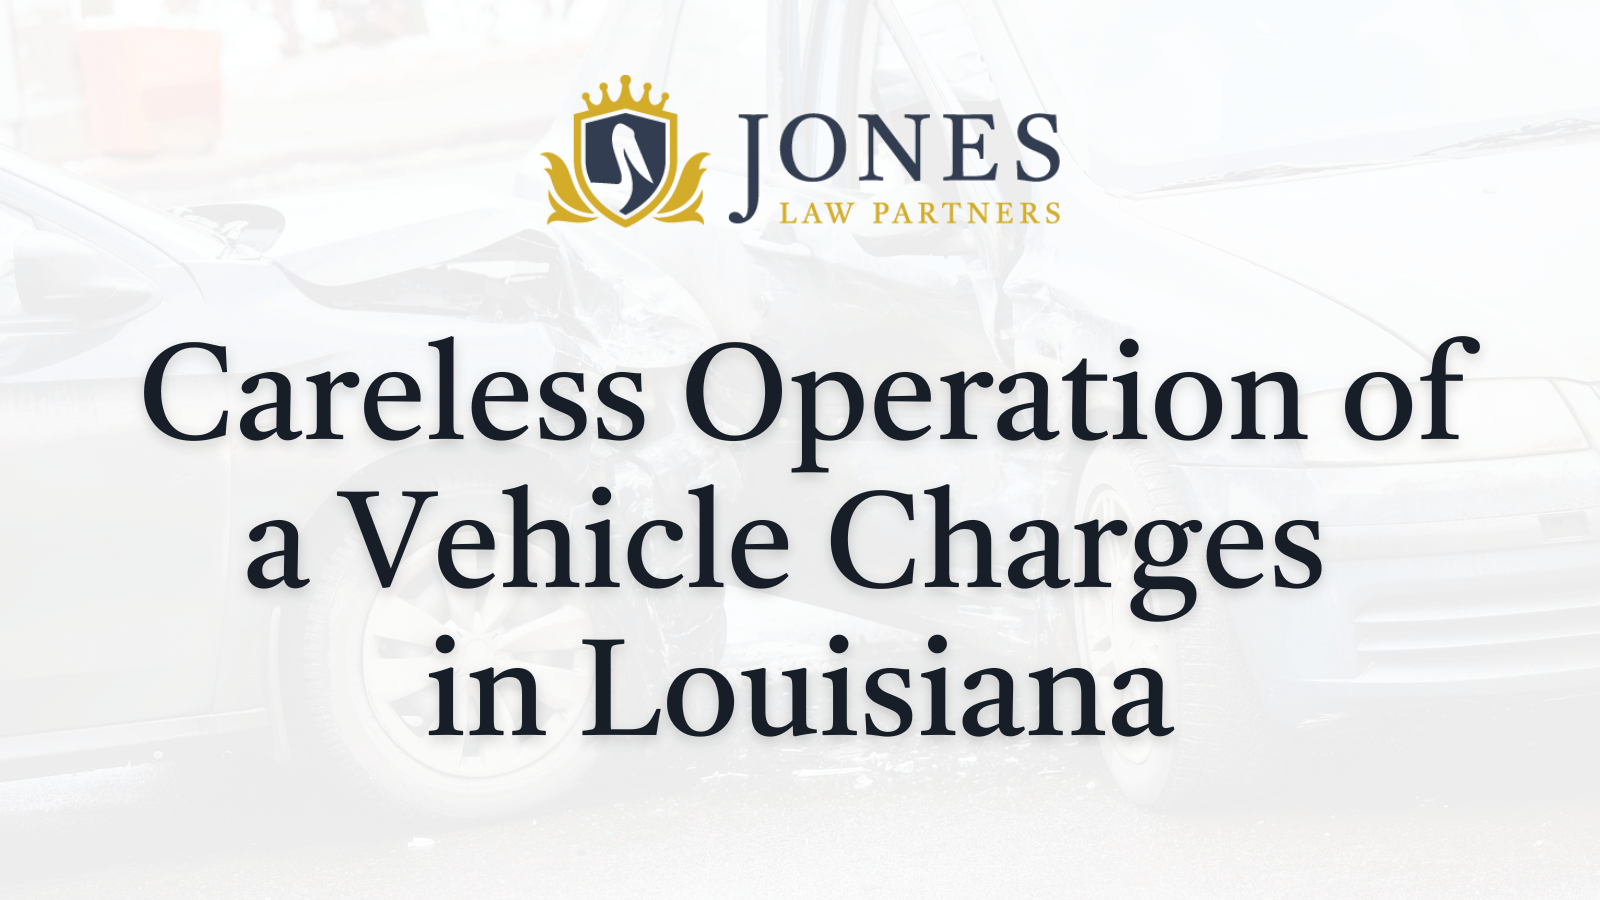 Careless Operation of a Vehicle Charges in Louisiana - Jones Law Partners - alexandria louisiana